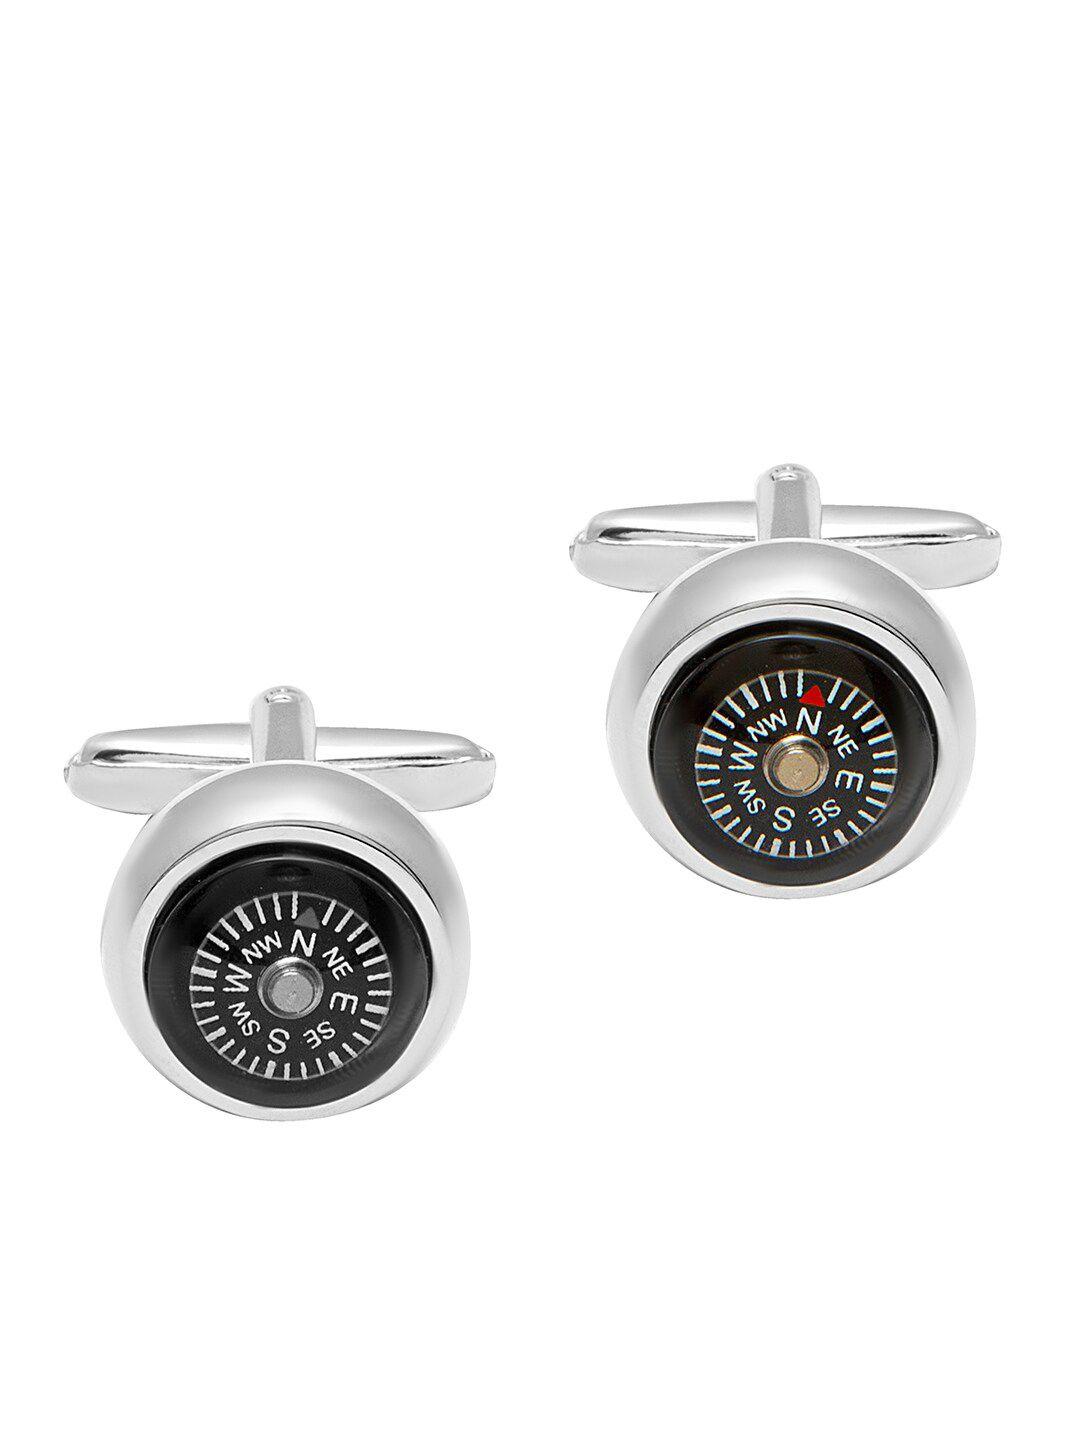 bodha men black silver-plated compass design cufflink